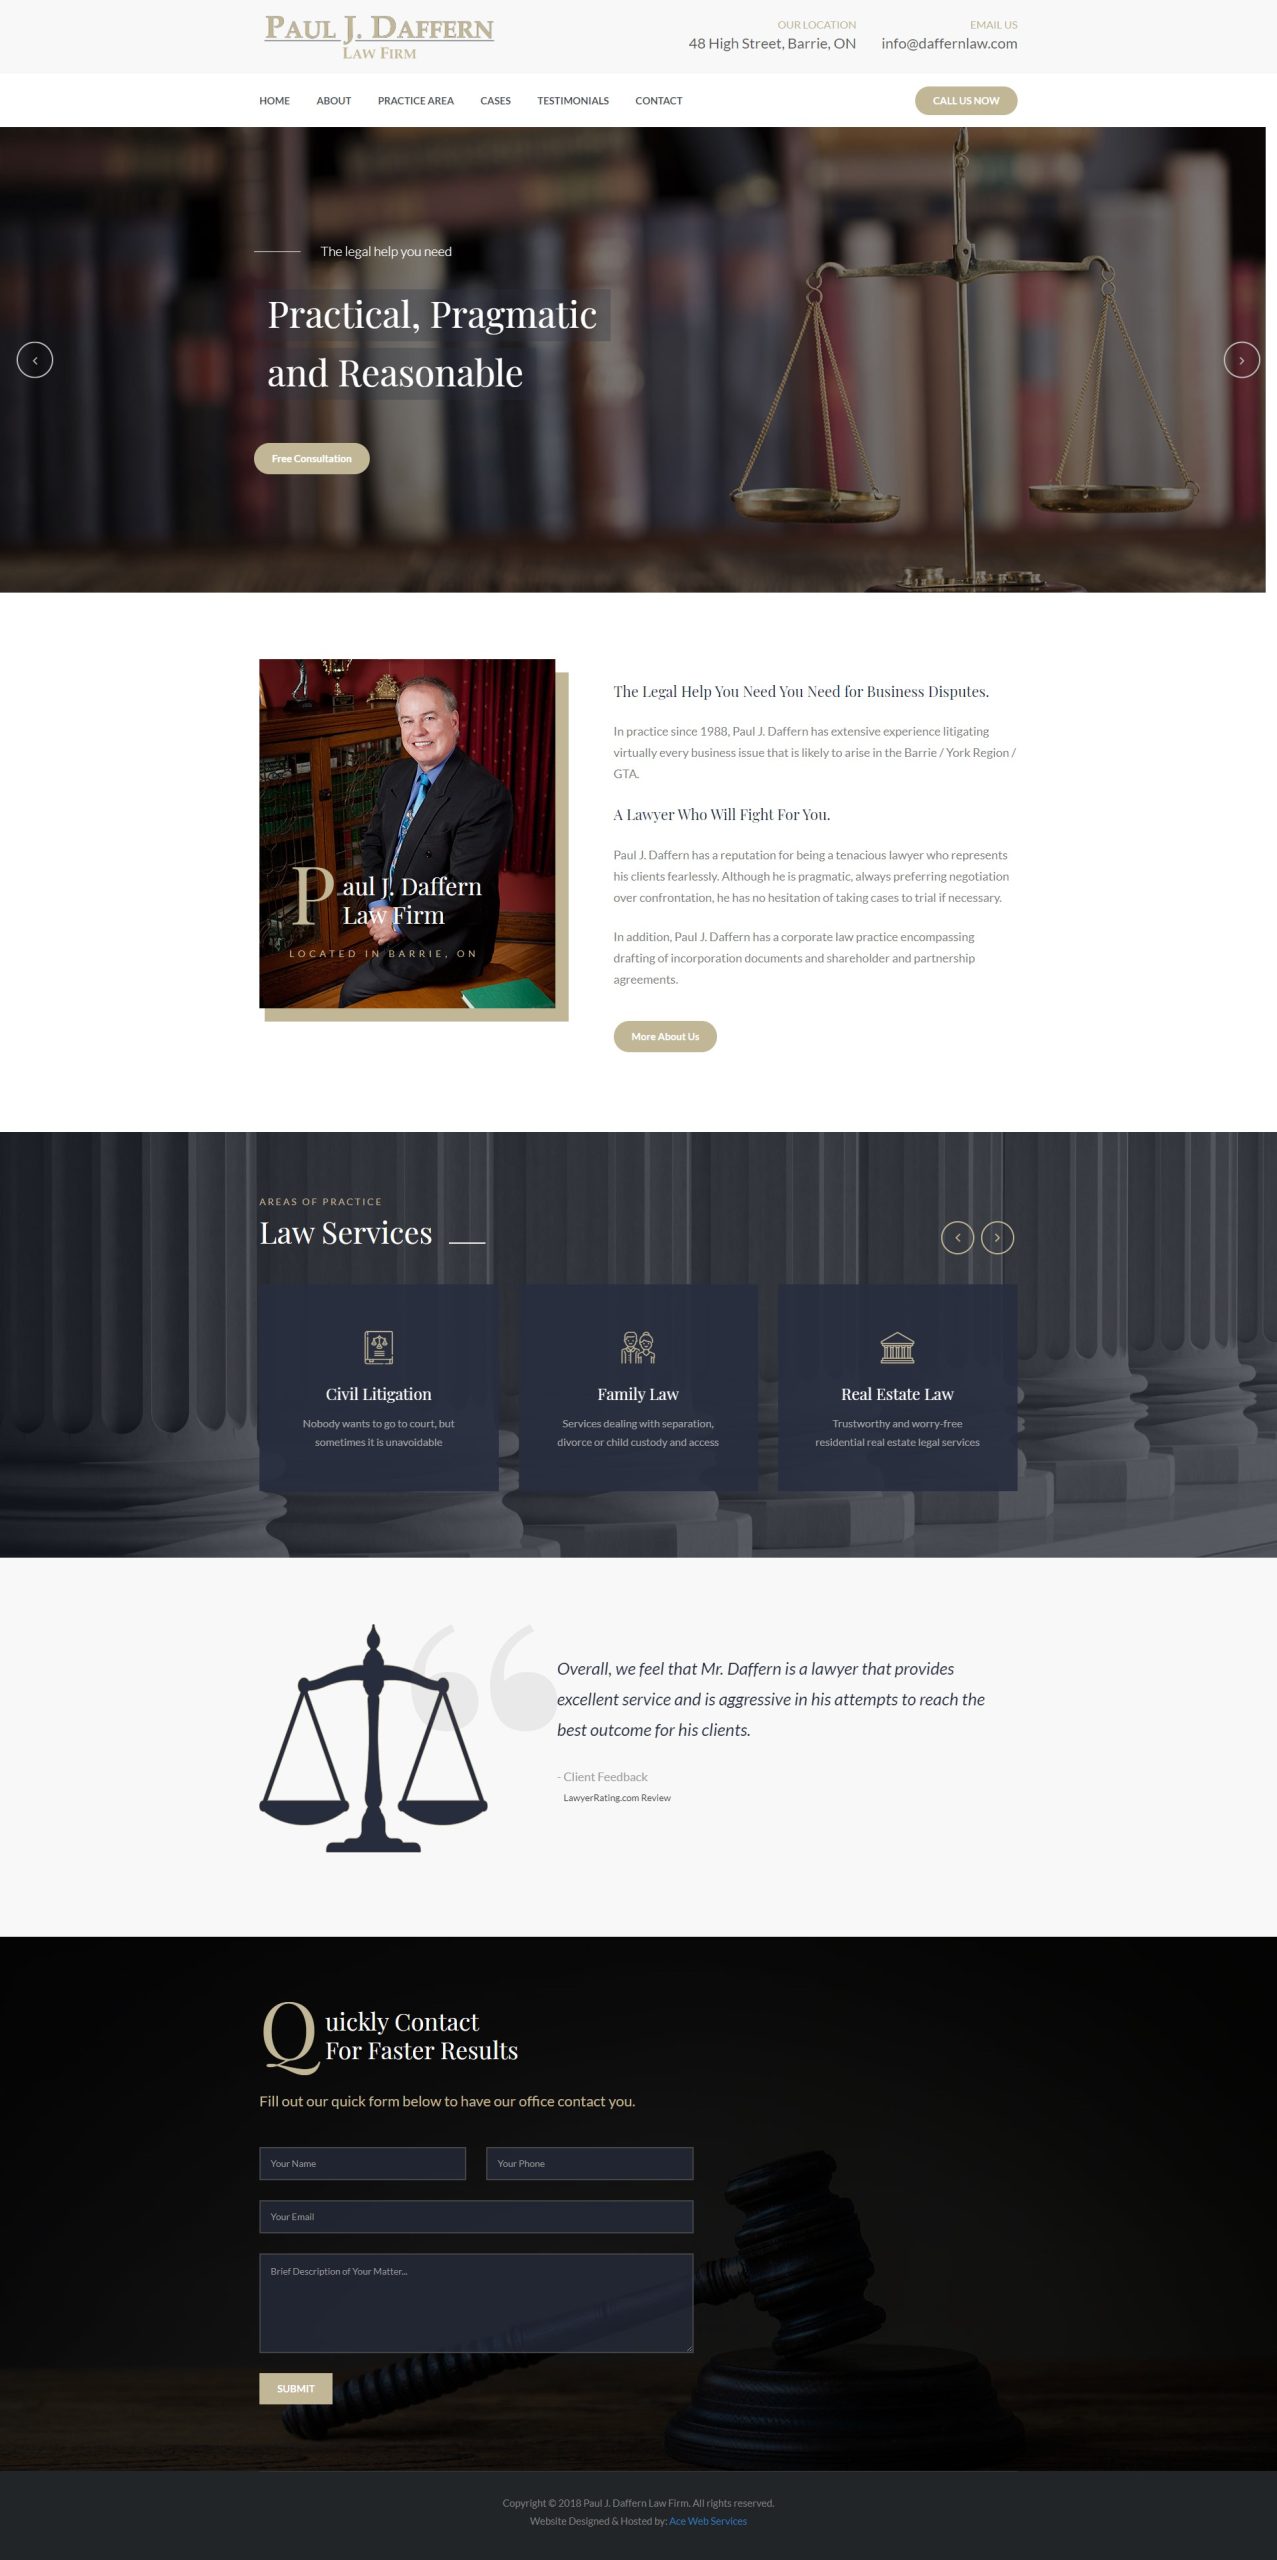 Paul J. Daffern Law Firm